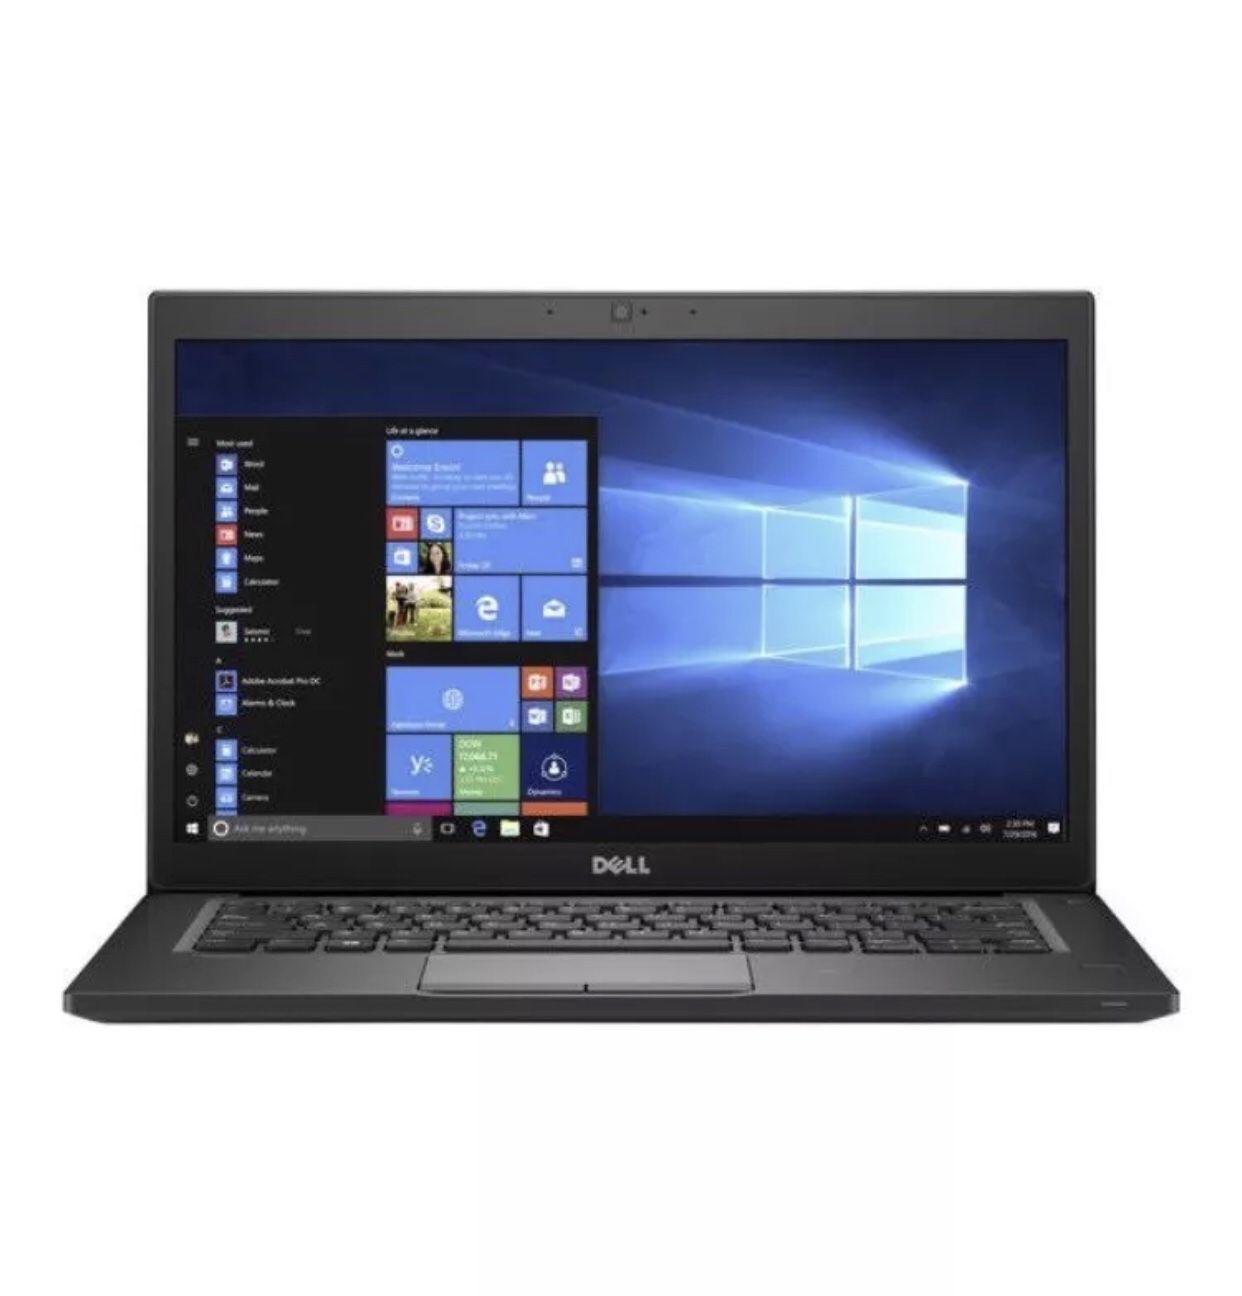 Dell Latitude 7480 14in laptop with intel core i5-7200U processor @ 2.50 ghz SSD 256gb 8gb ram Windows 10 pro